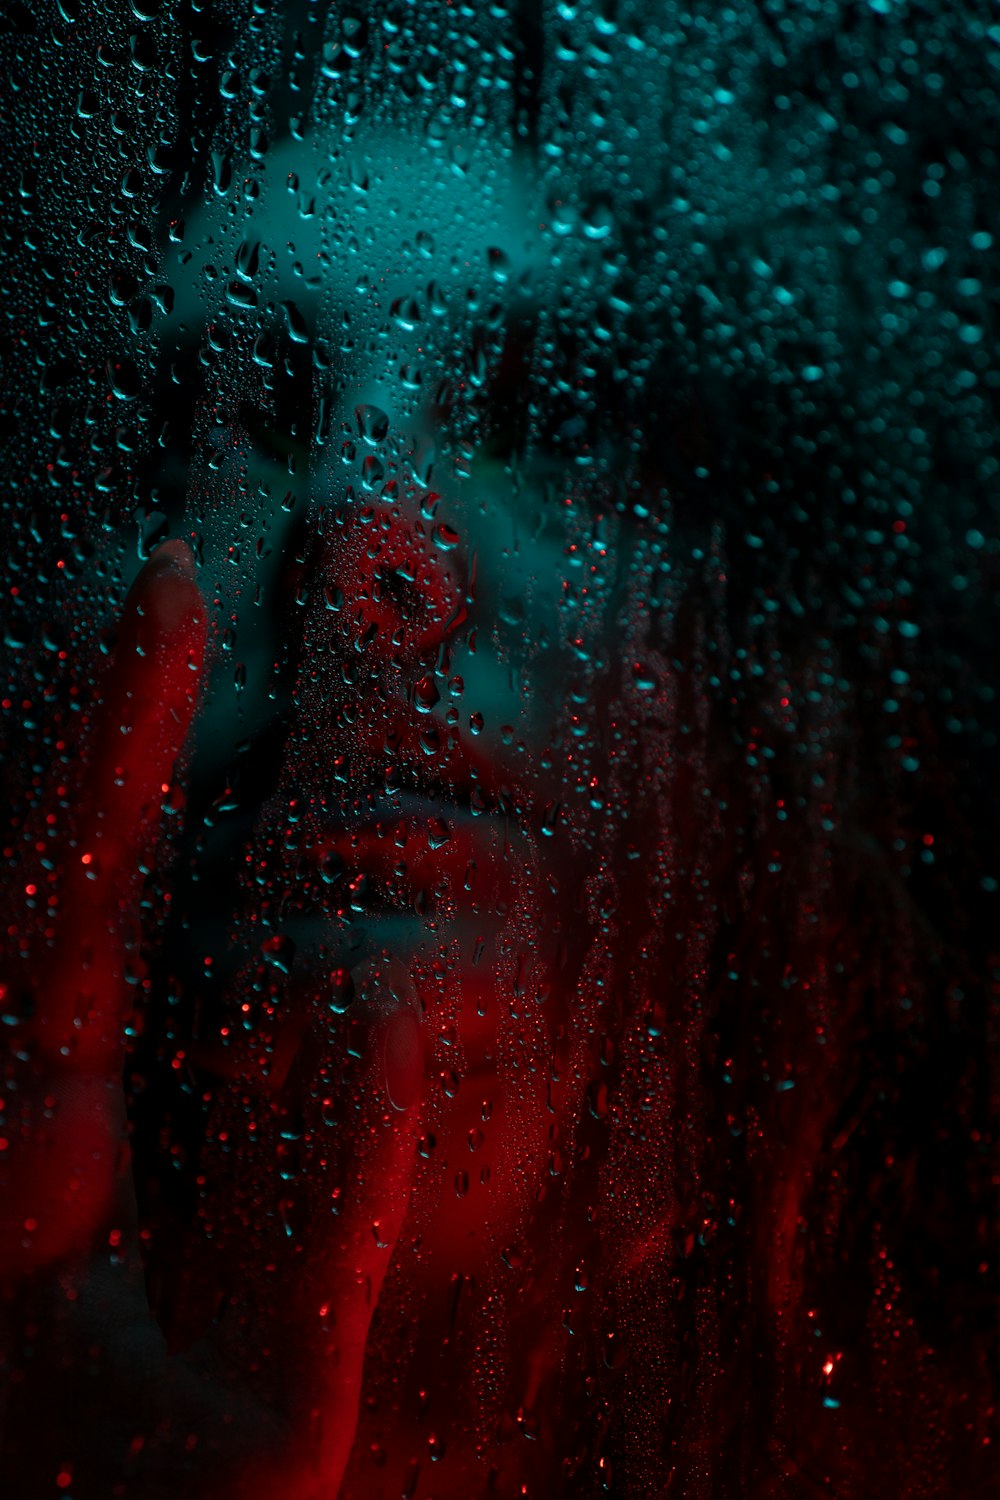 Una mujer es vista a través de una ventana cubierta de lluvia